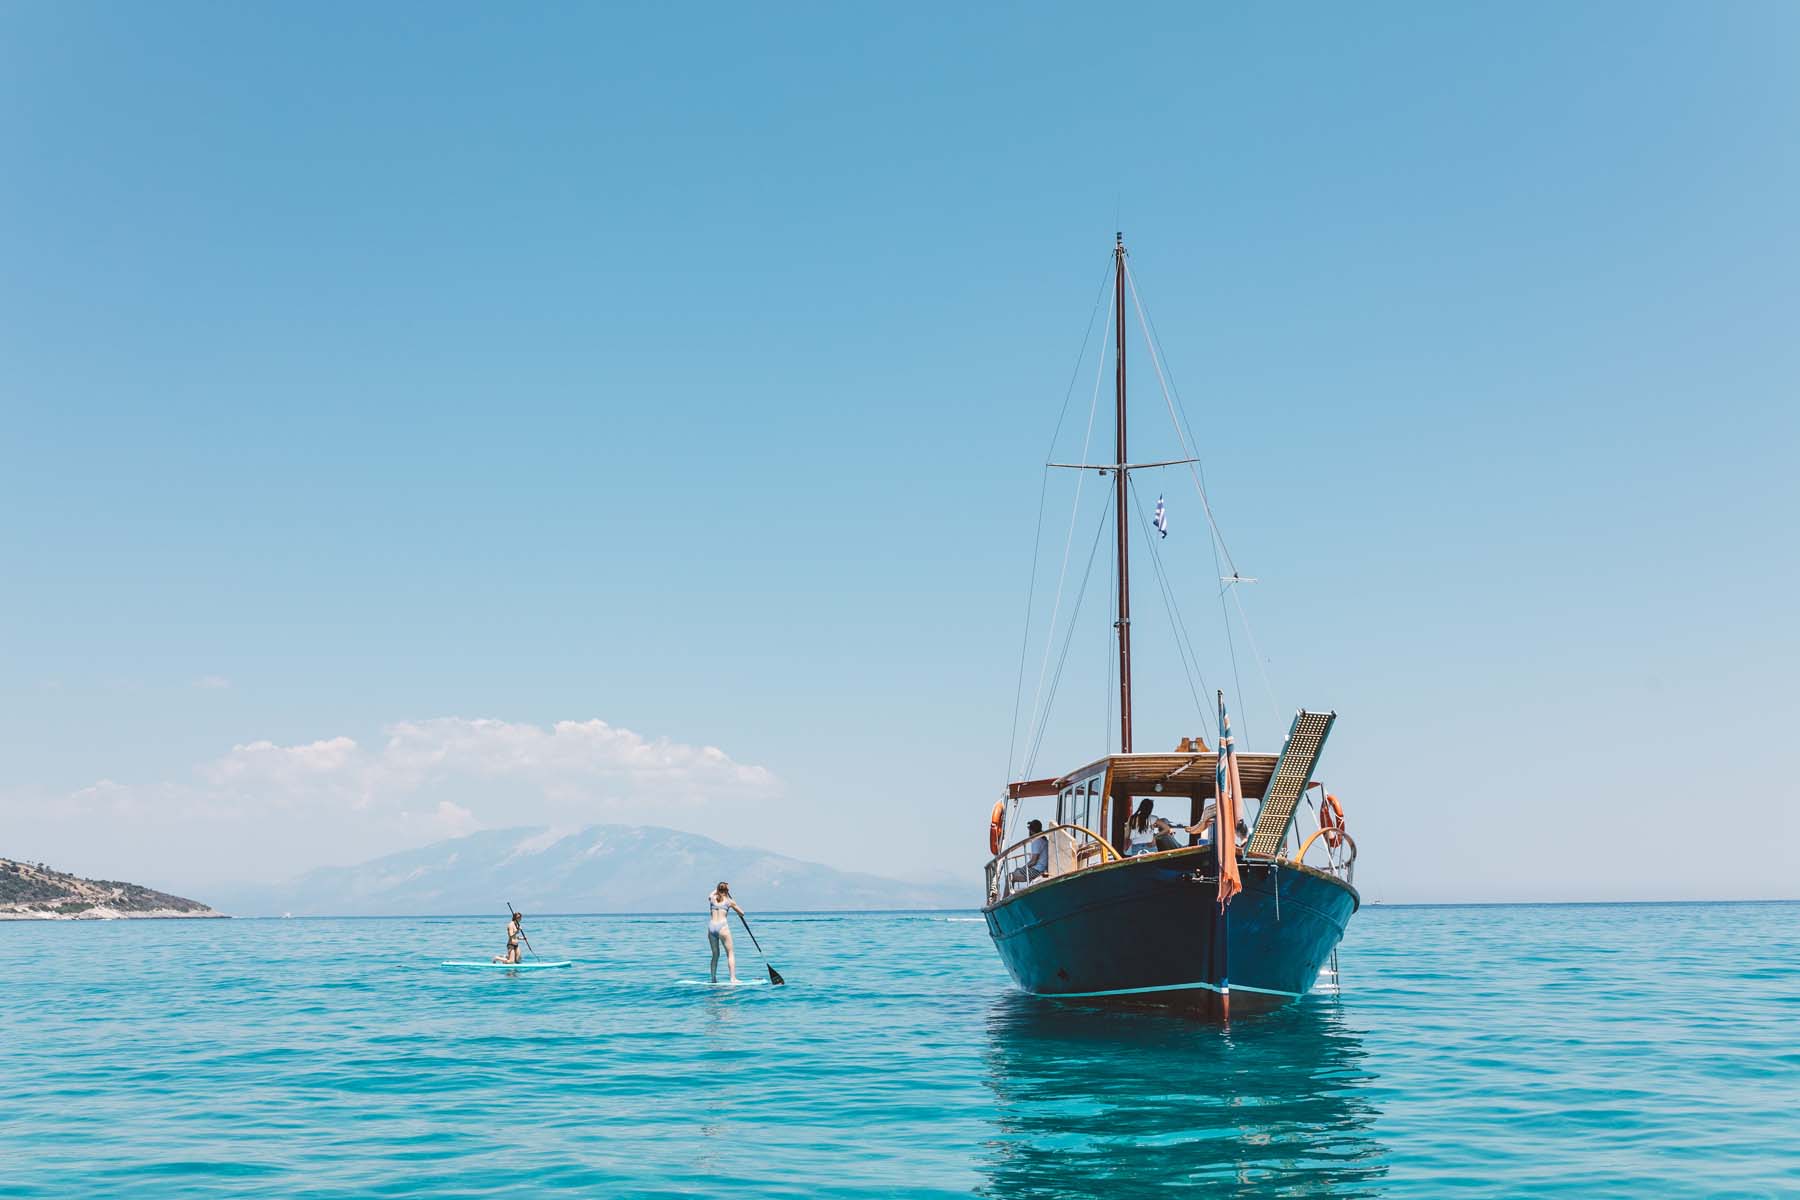 Peligoni's classic wooden yacht Odyssey